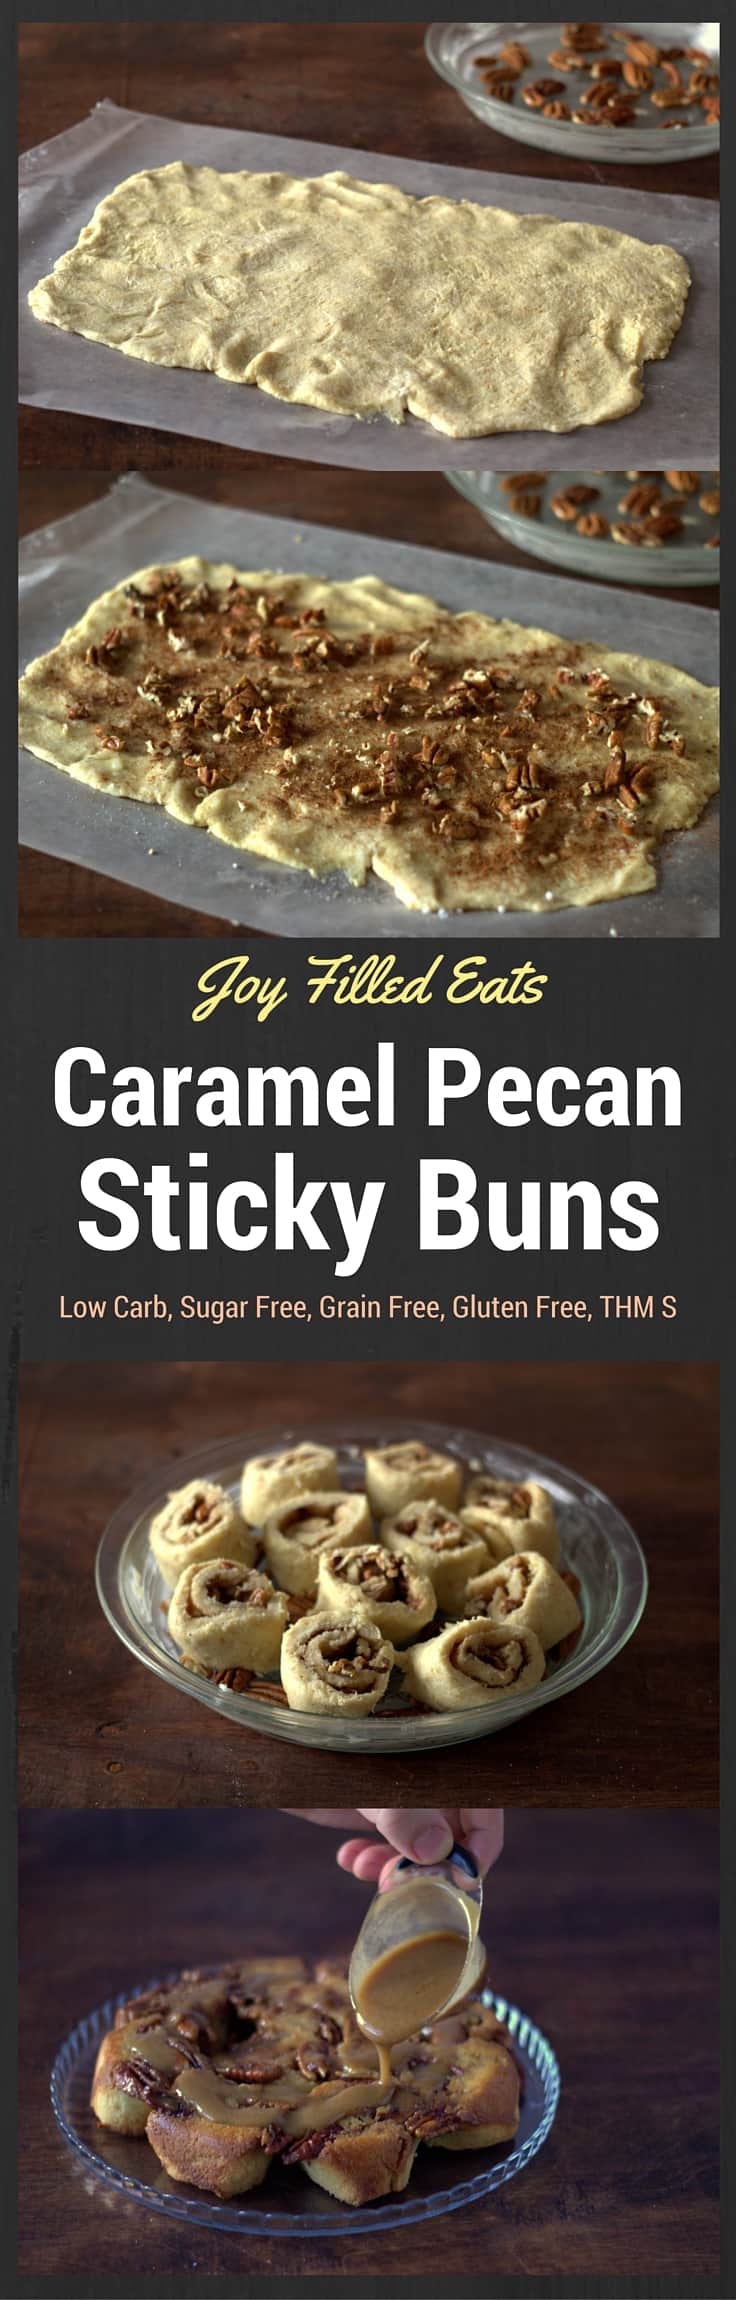 pinterest image for caramel pecan sticky buns